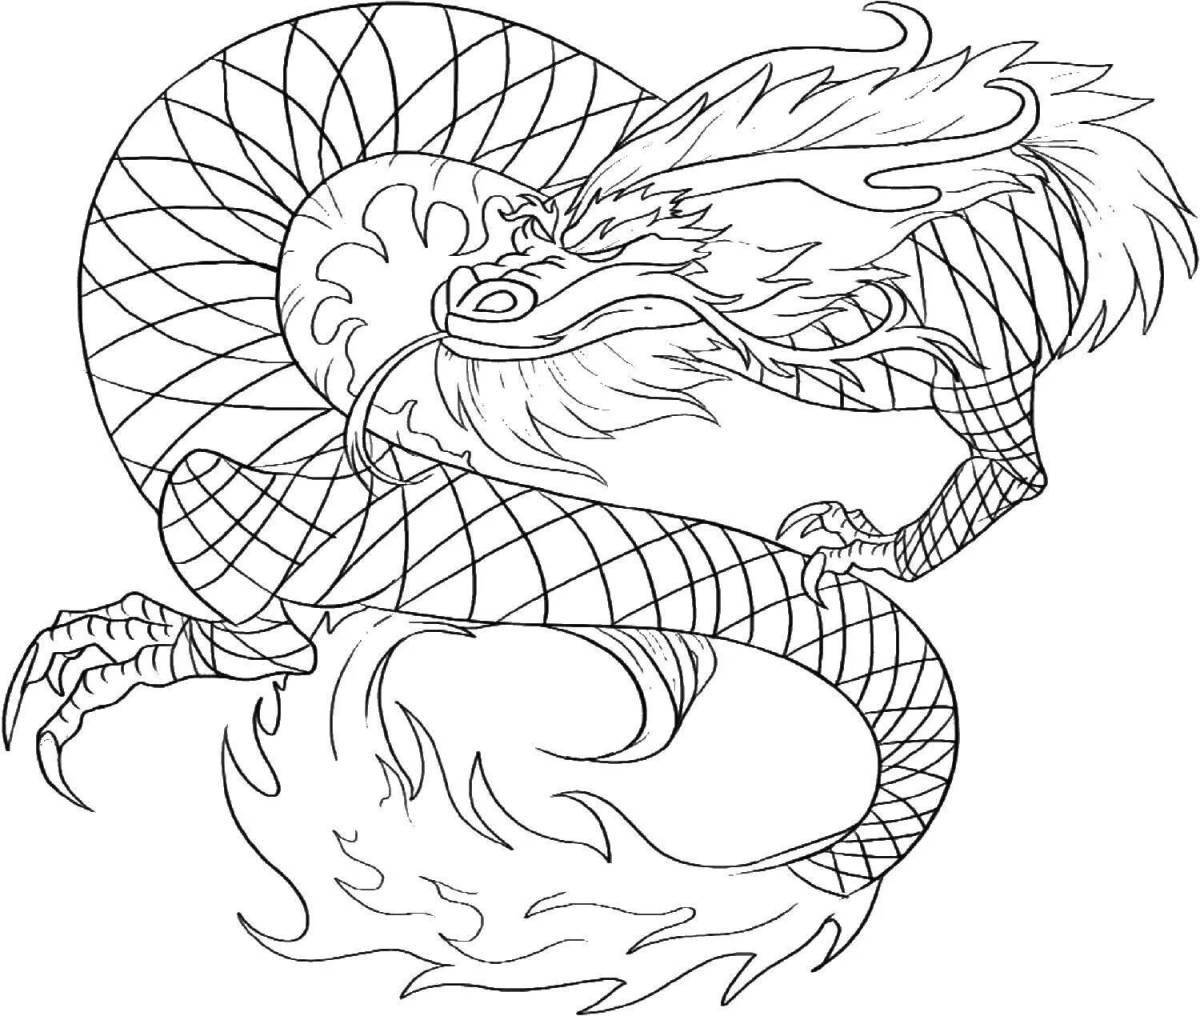 Coloring book glowing japanese dragon